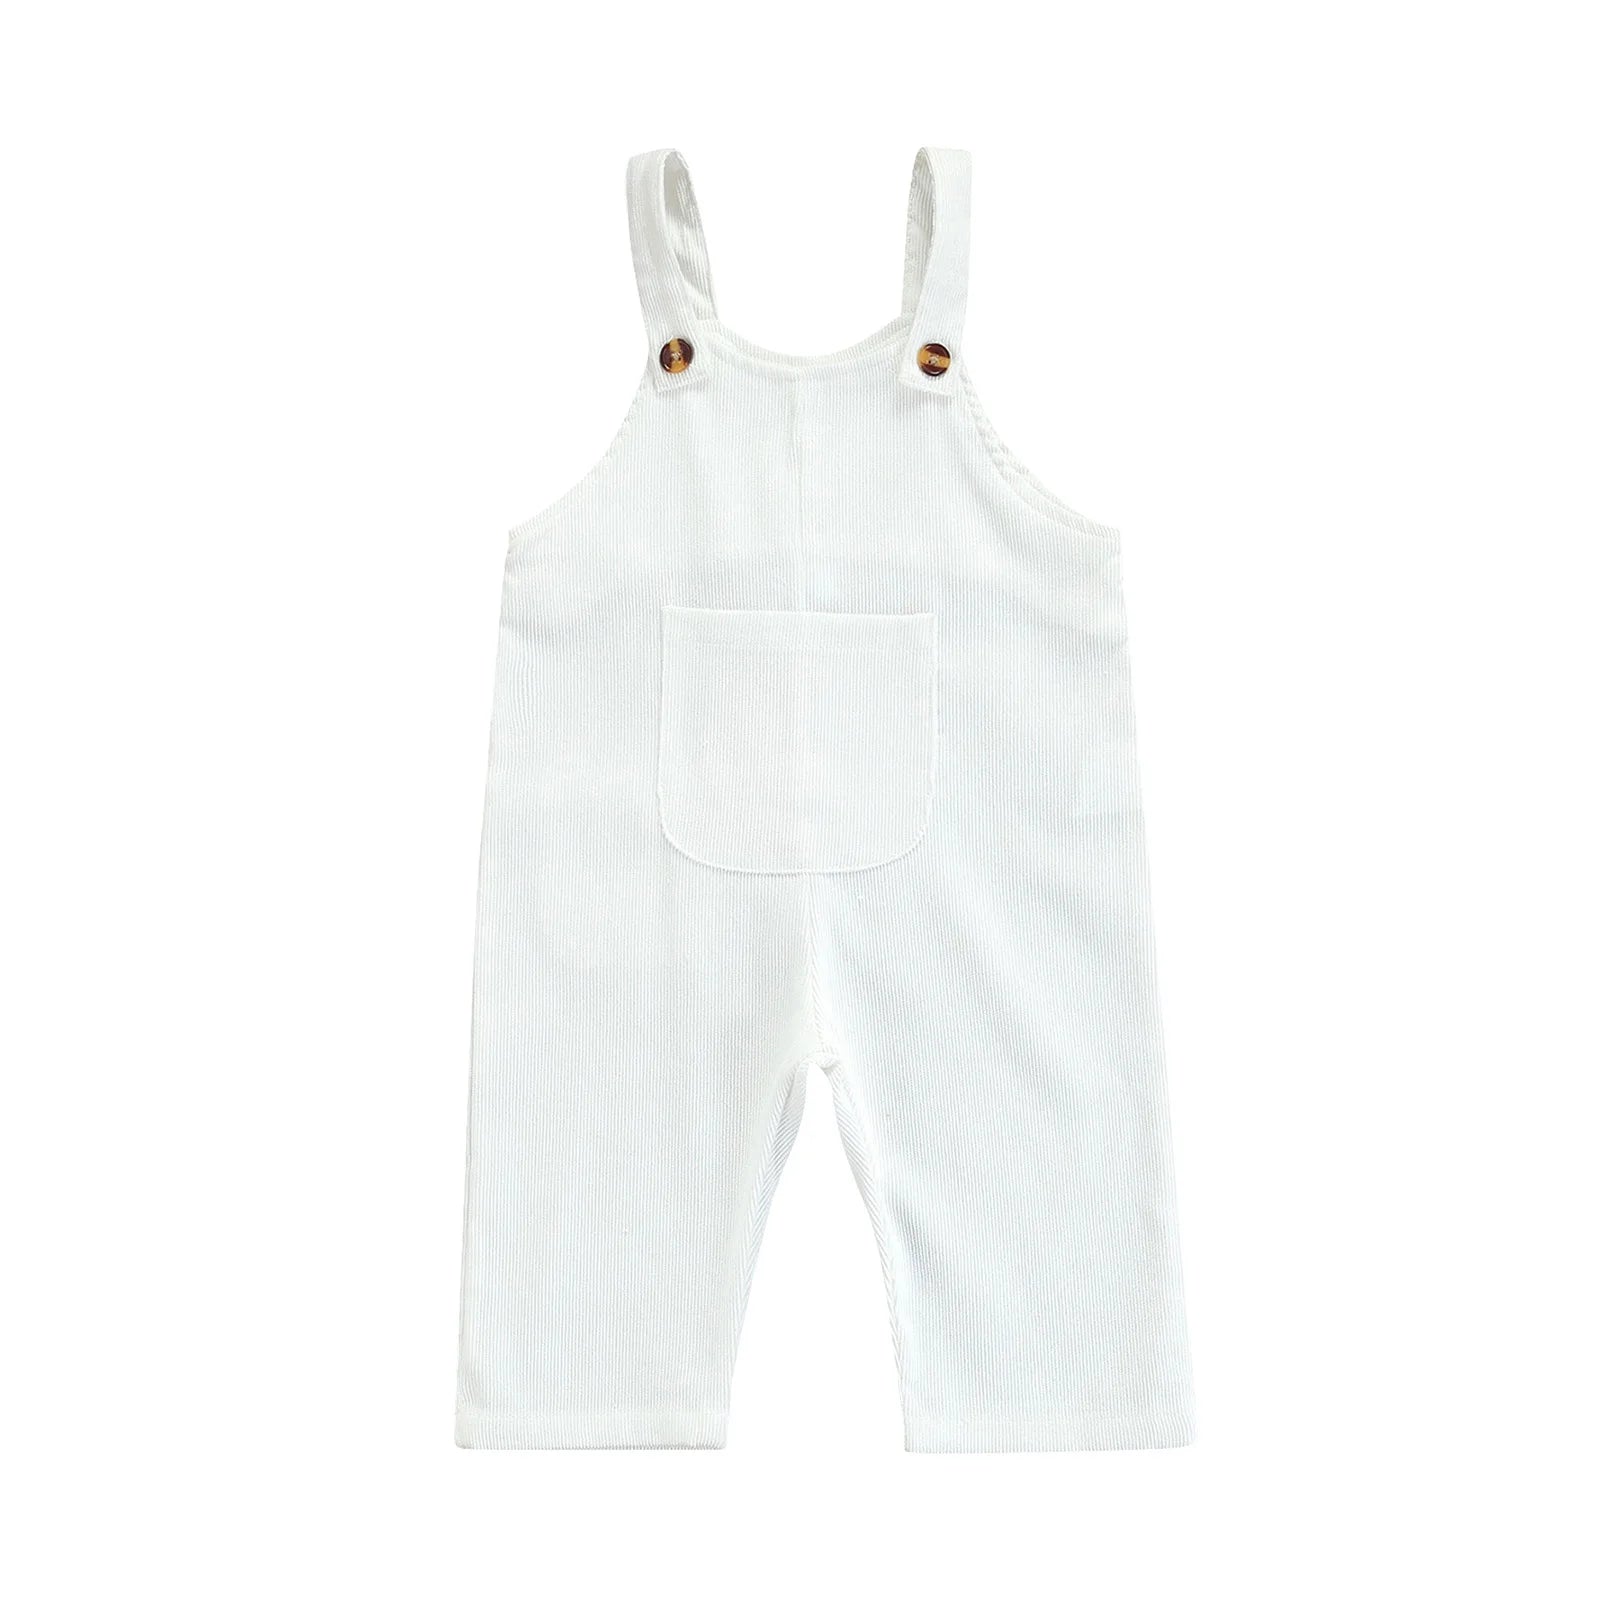 Infant Baby Uni-sex Corduroy Romper Summer Sleeveless Dress WHITE by Baby Minaj Cruz